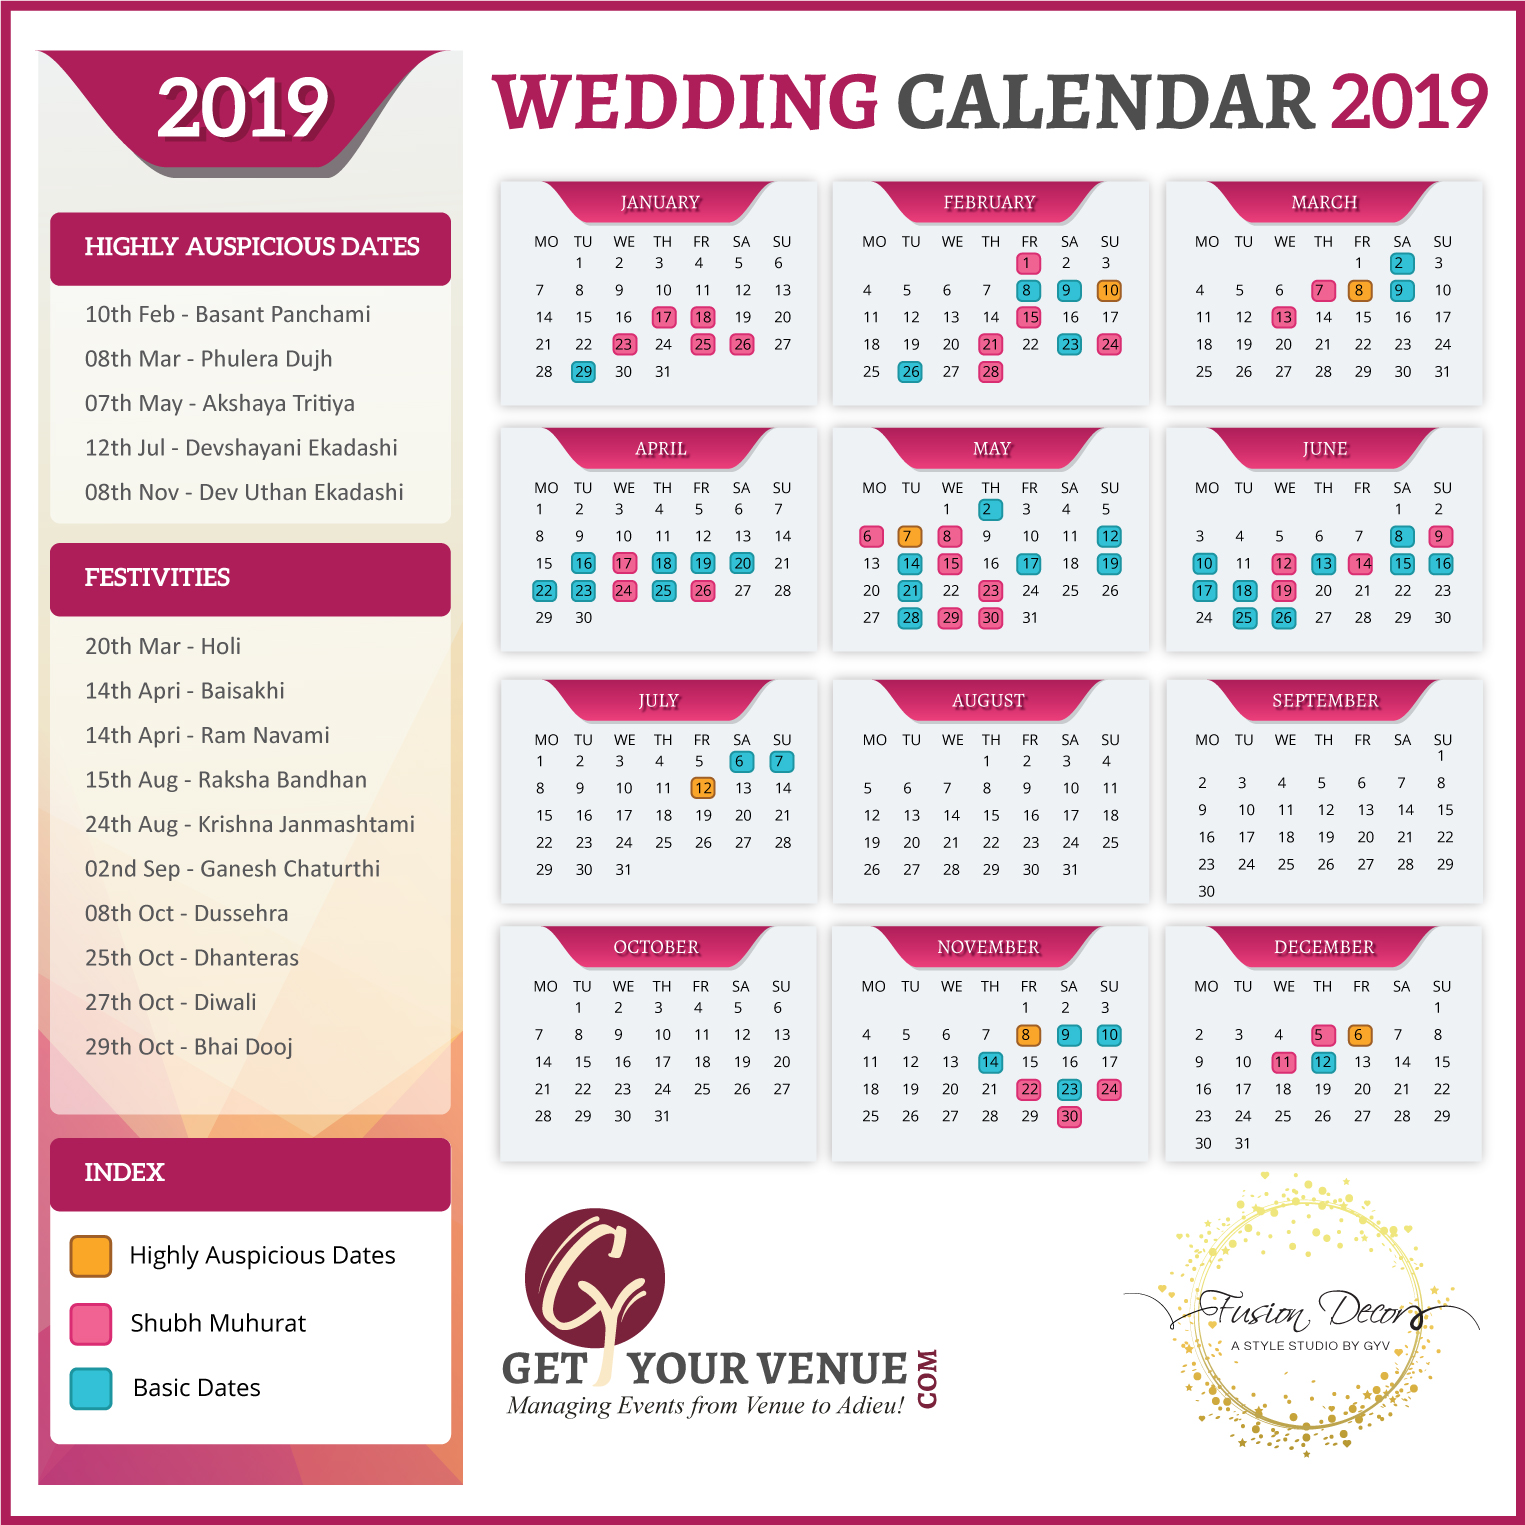 Best Wedding Dates To Get Married in 2019 - GYV Blog1525 x 1525